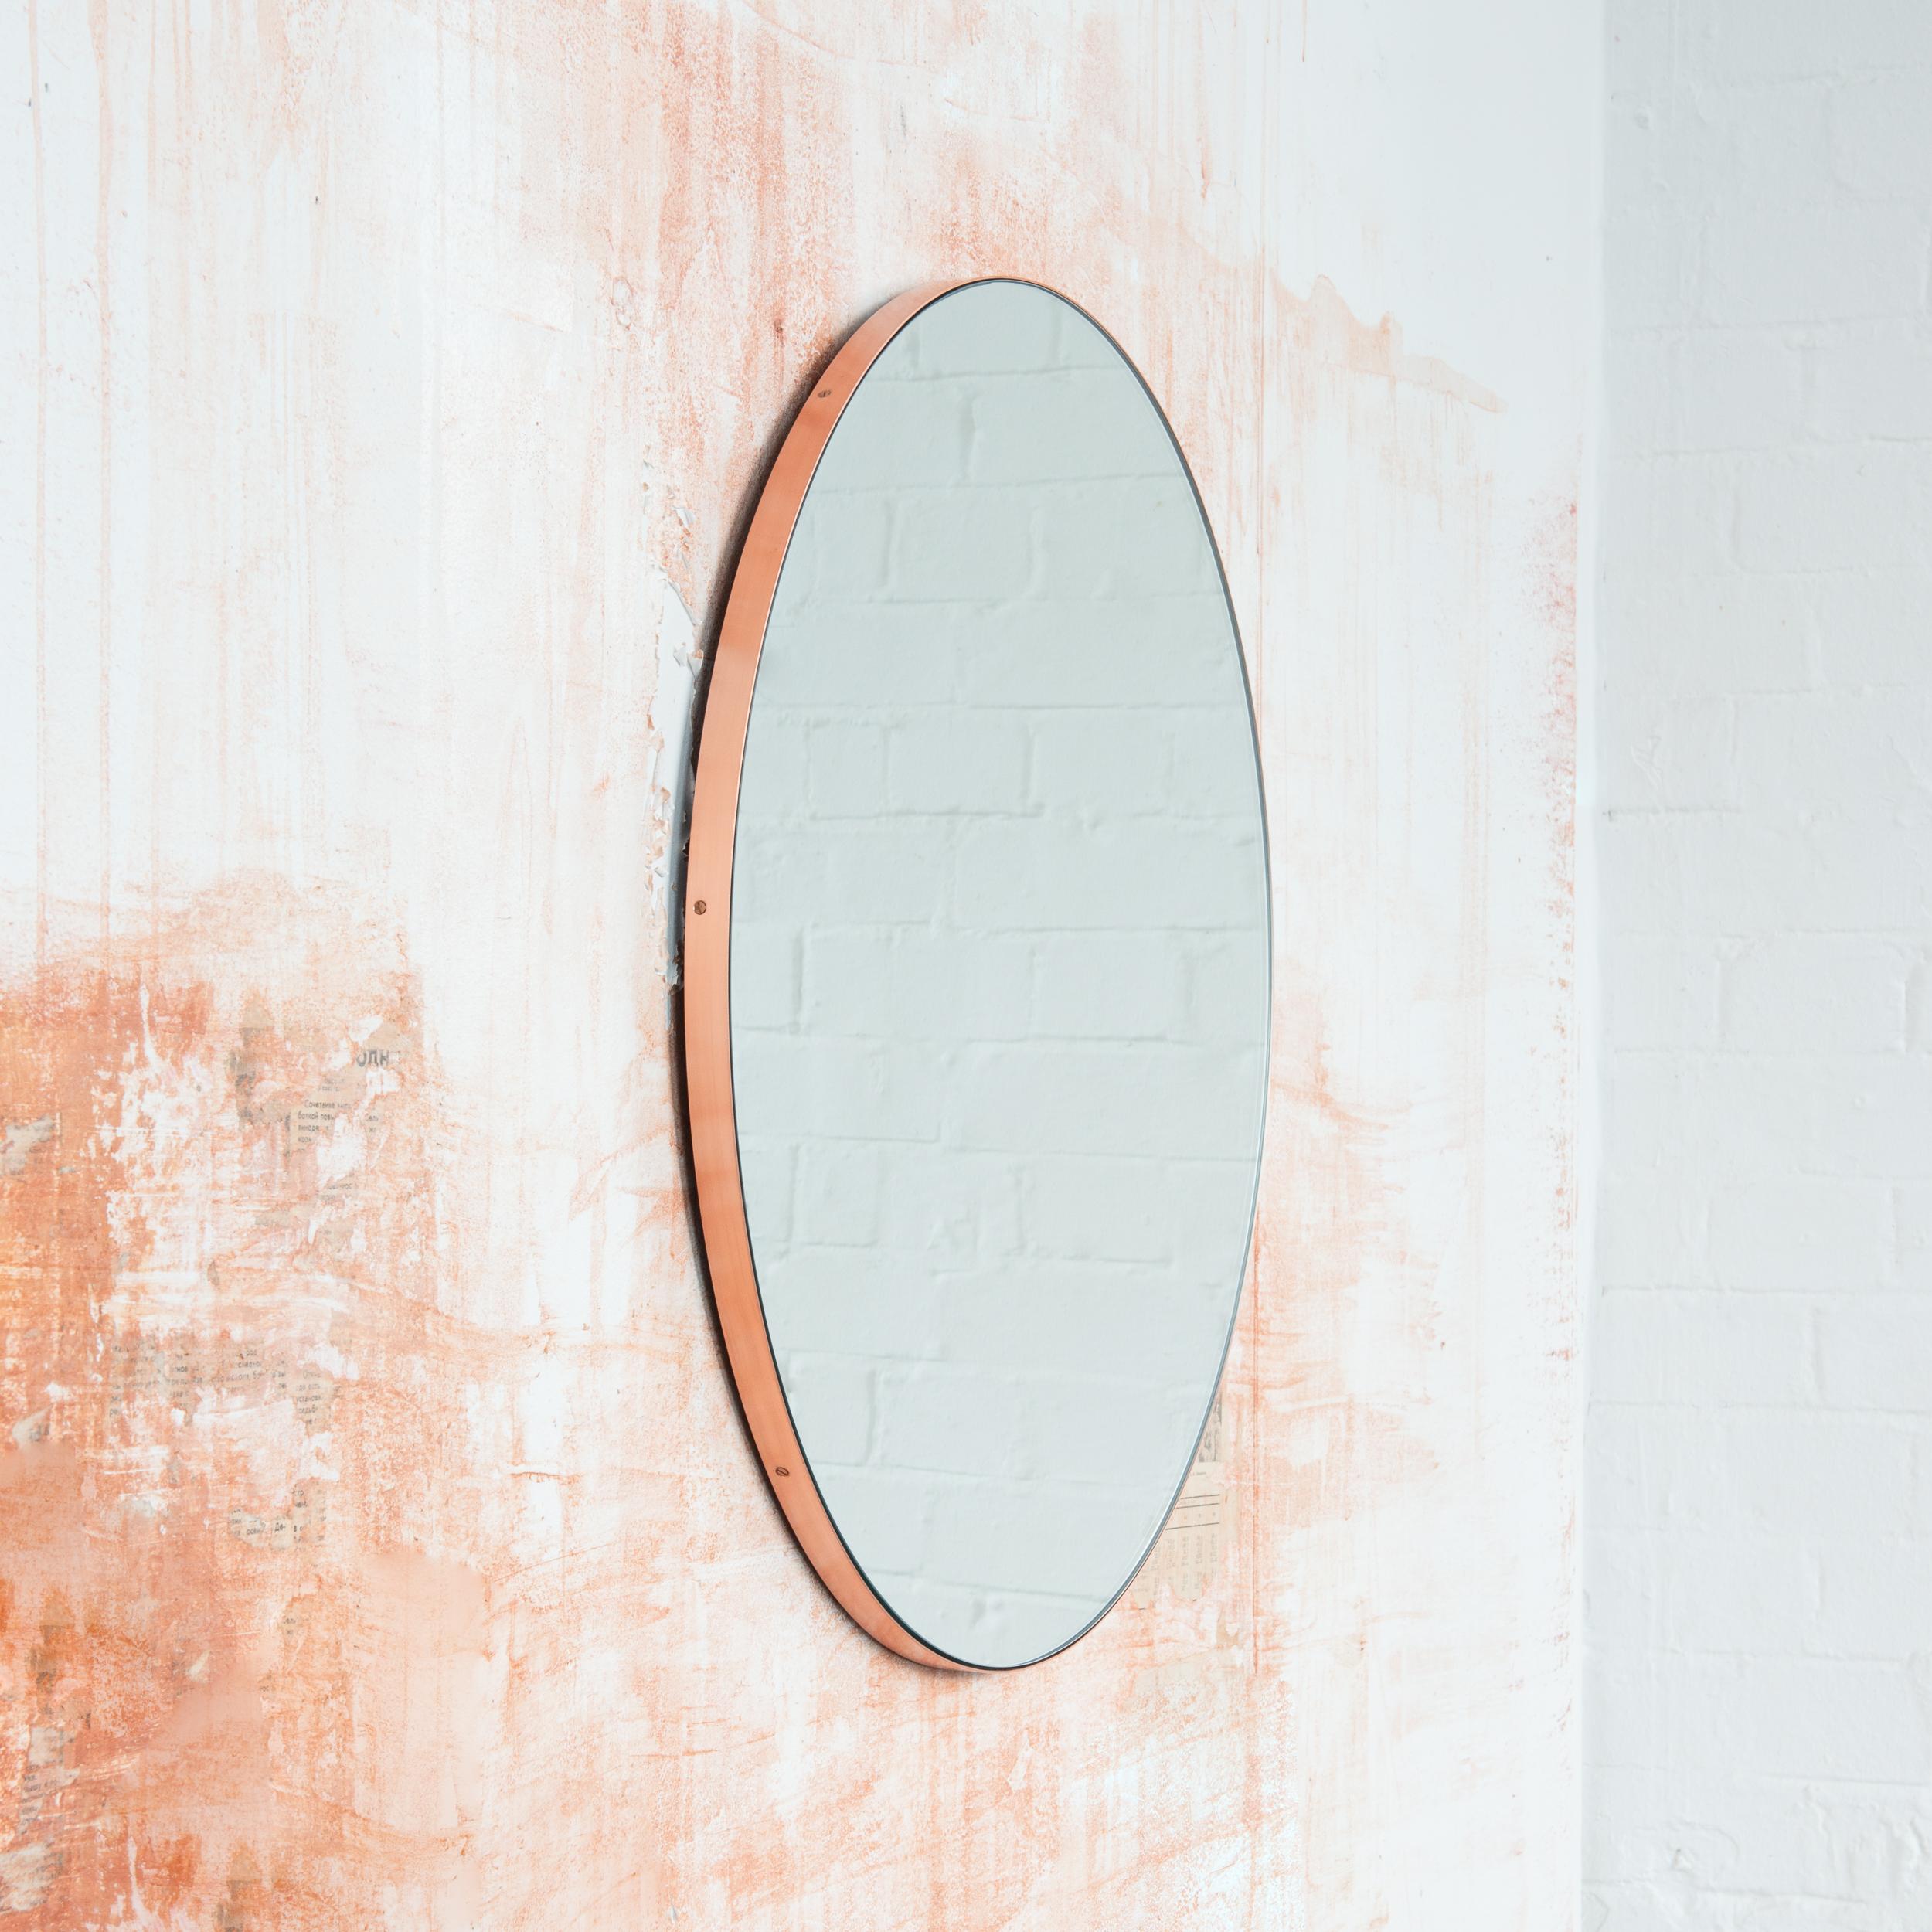 Minimalist Orbis Round Contemporary Mirror with Copper Frame, Medium For Sale